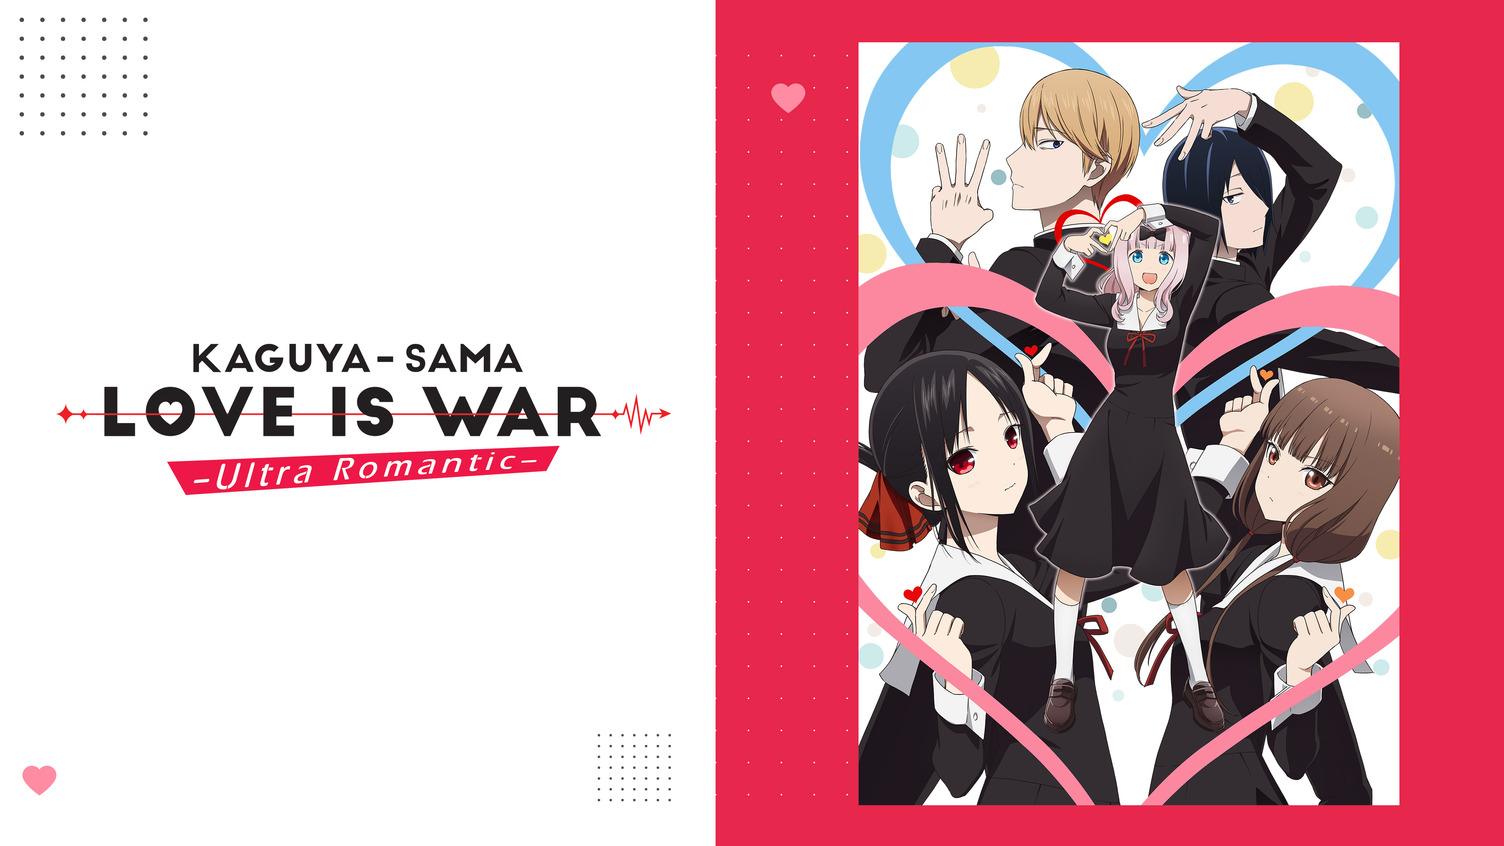 Kaguya-sama: Love is War -Ultra Romantic- contará también con